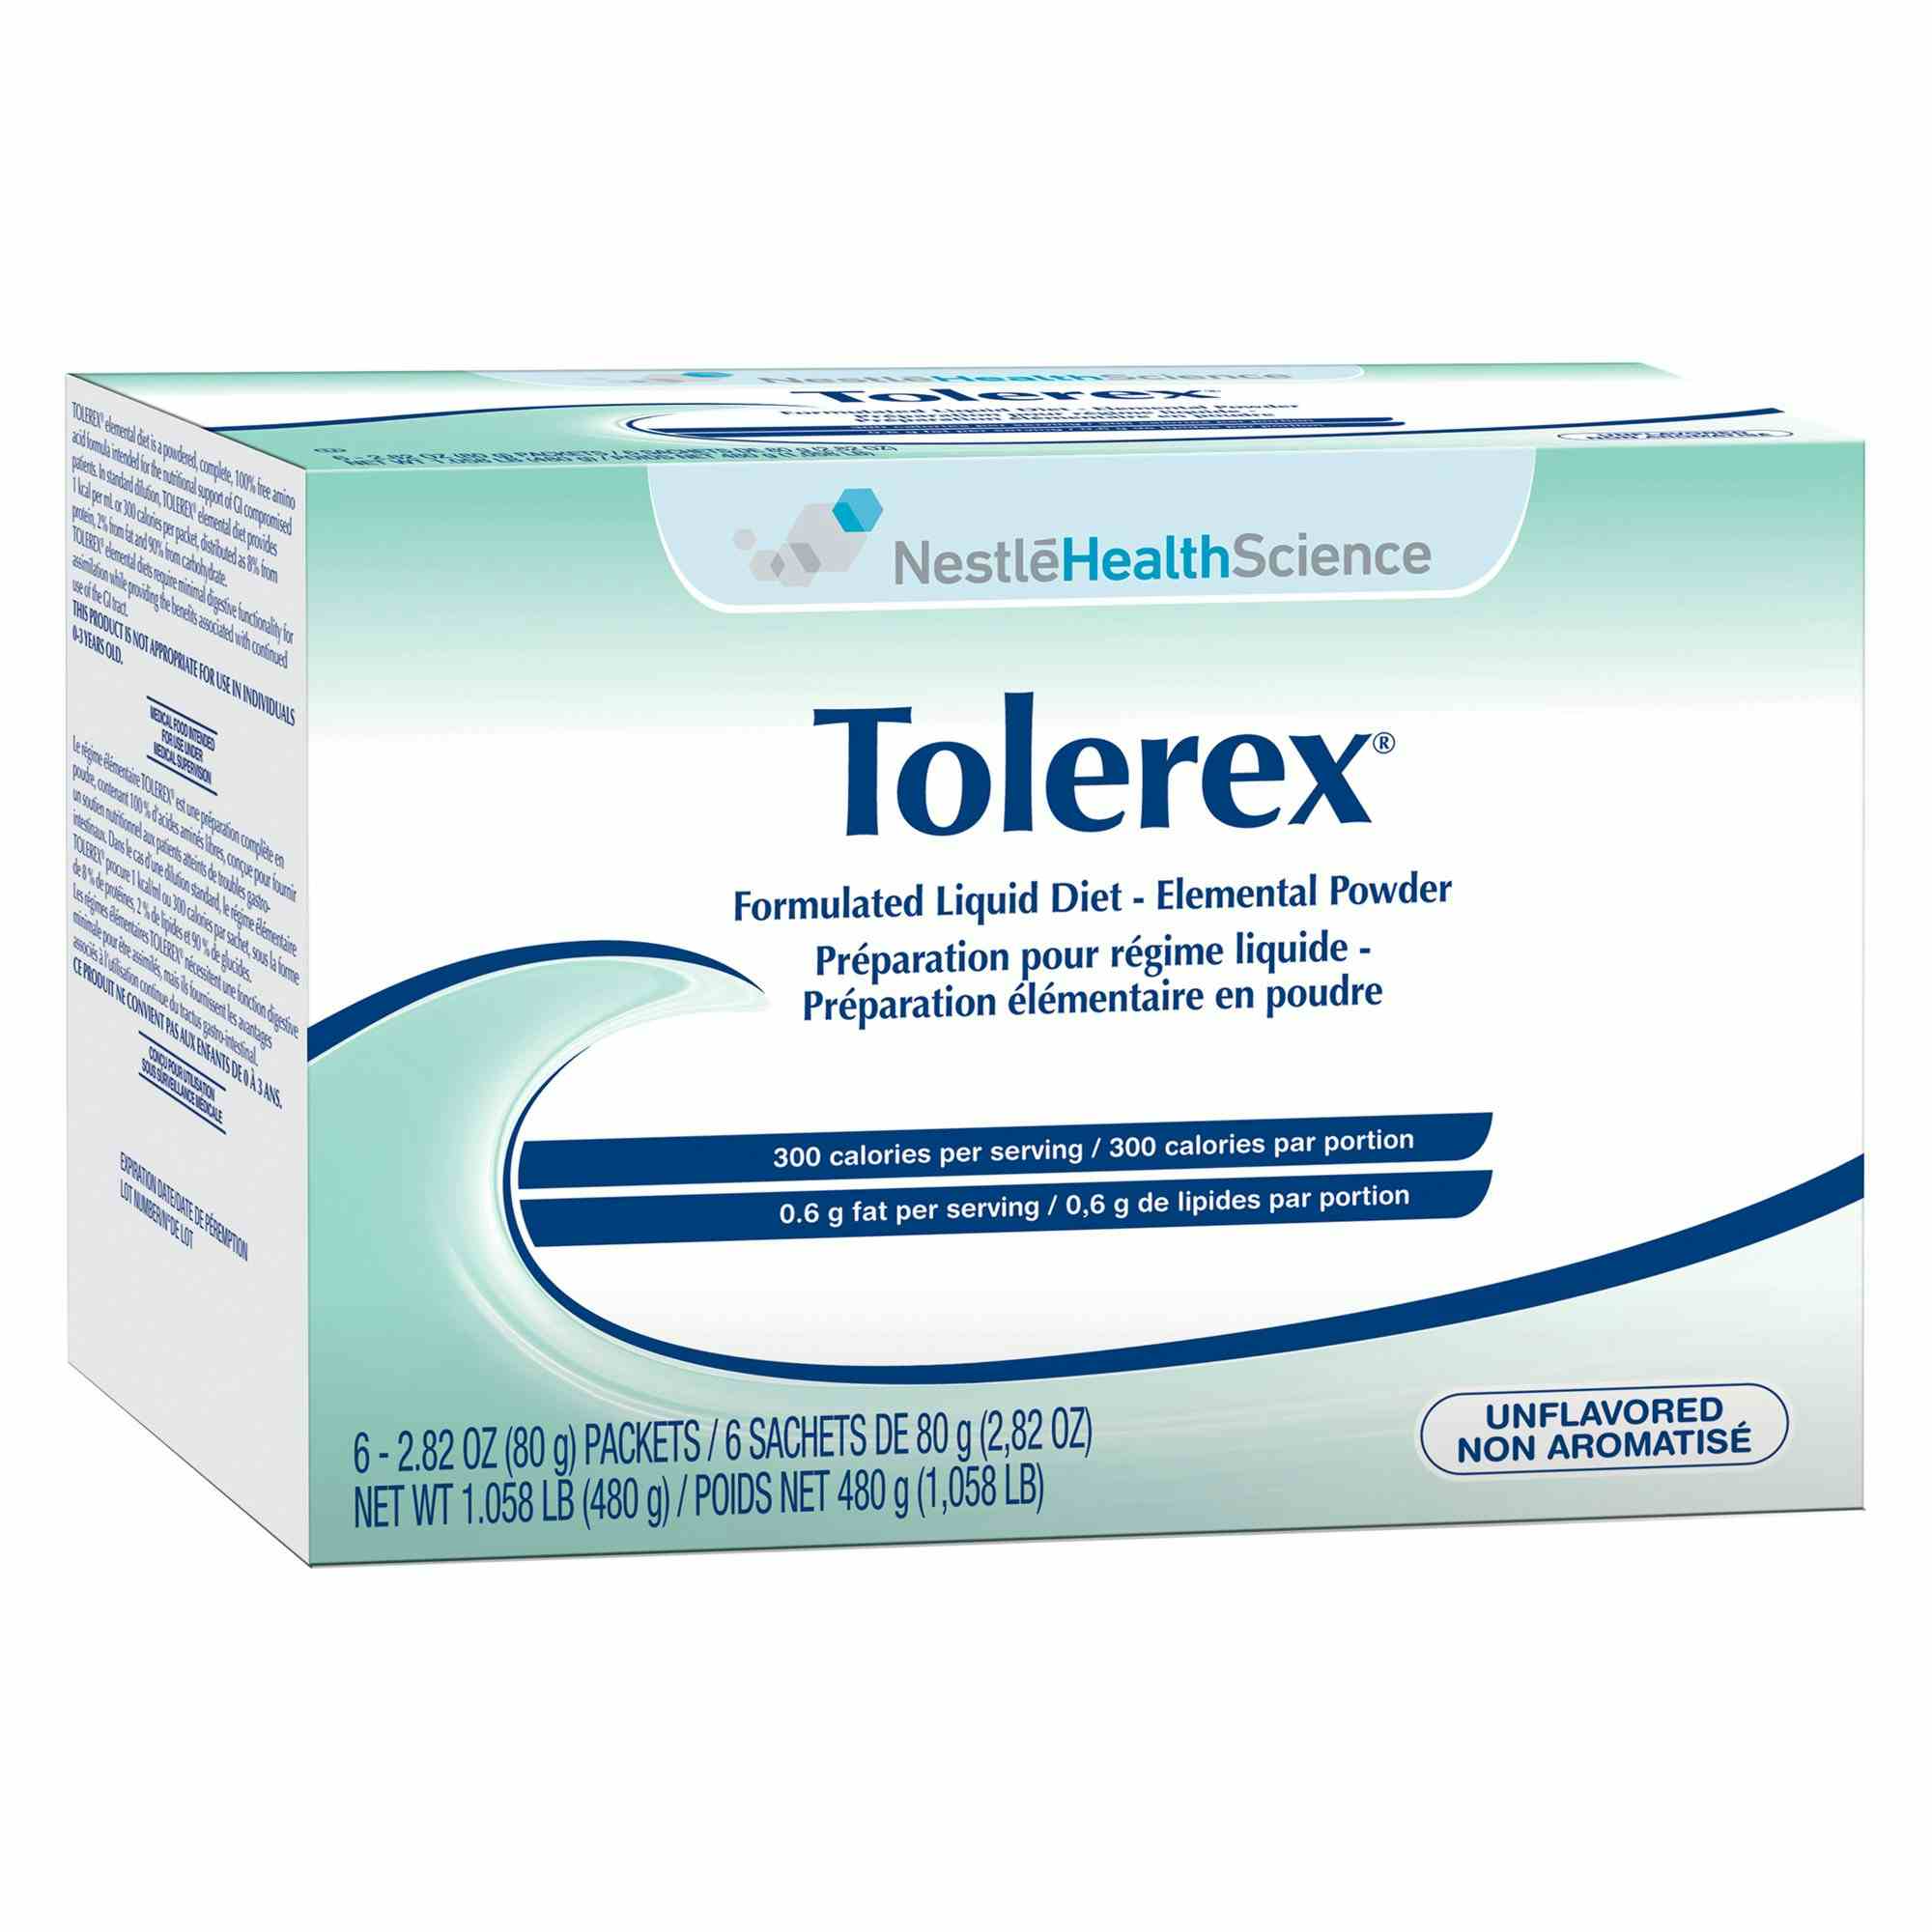 Nestle HealthScience Tolorex Formulated Liquid Diet Elemental Powder Tube Feeding Formula, 10043900458059, Carton of 6